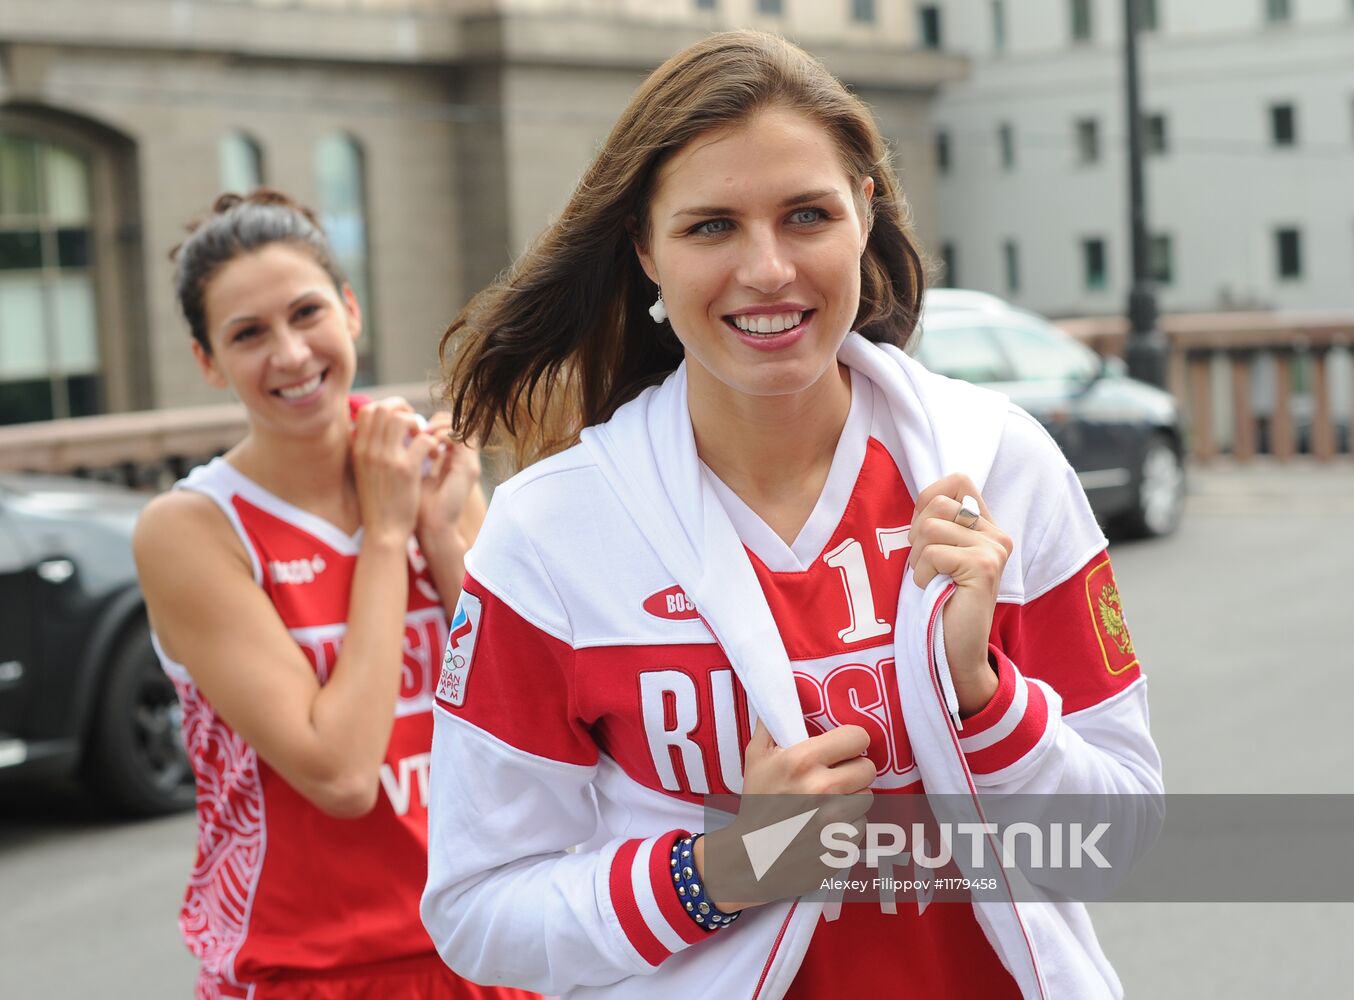 Uniform of Russian Olympic teams